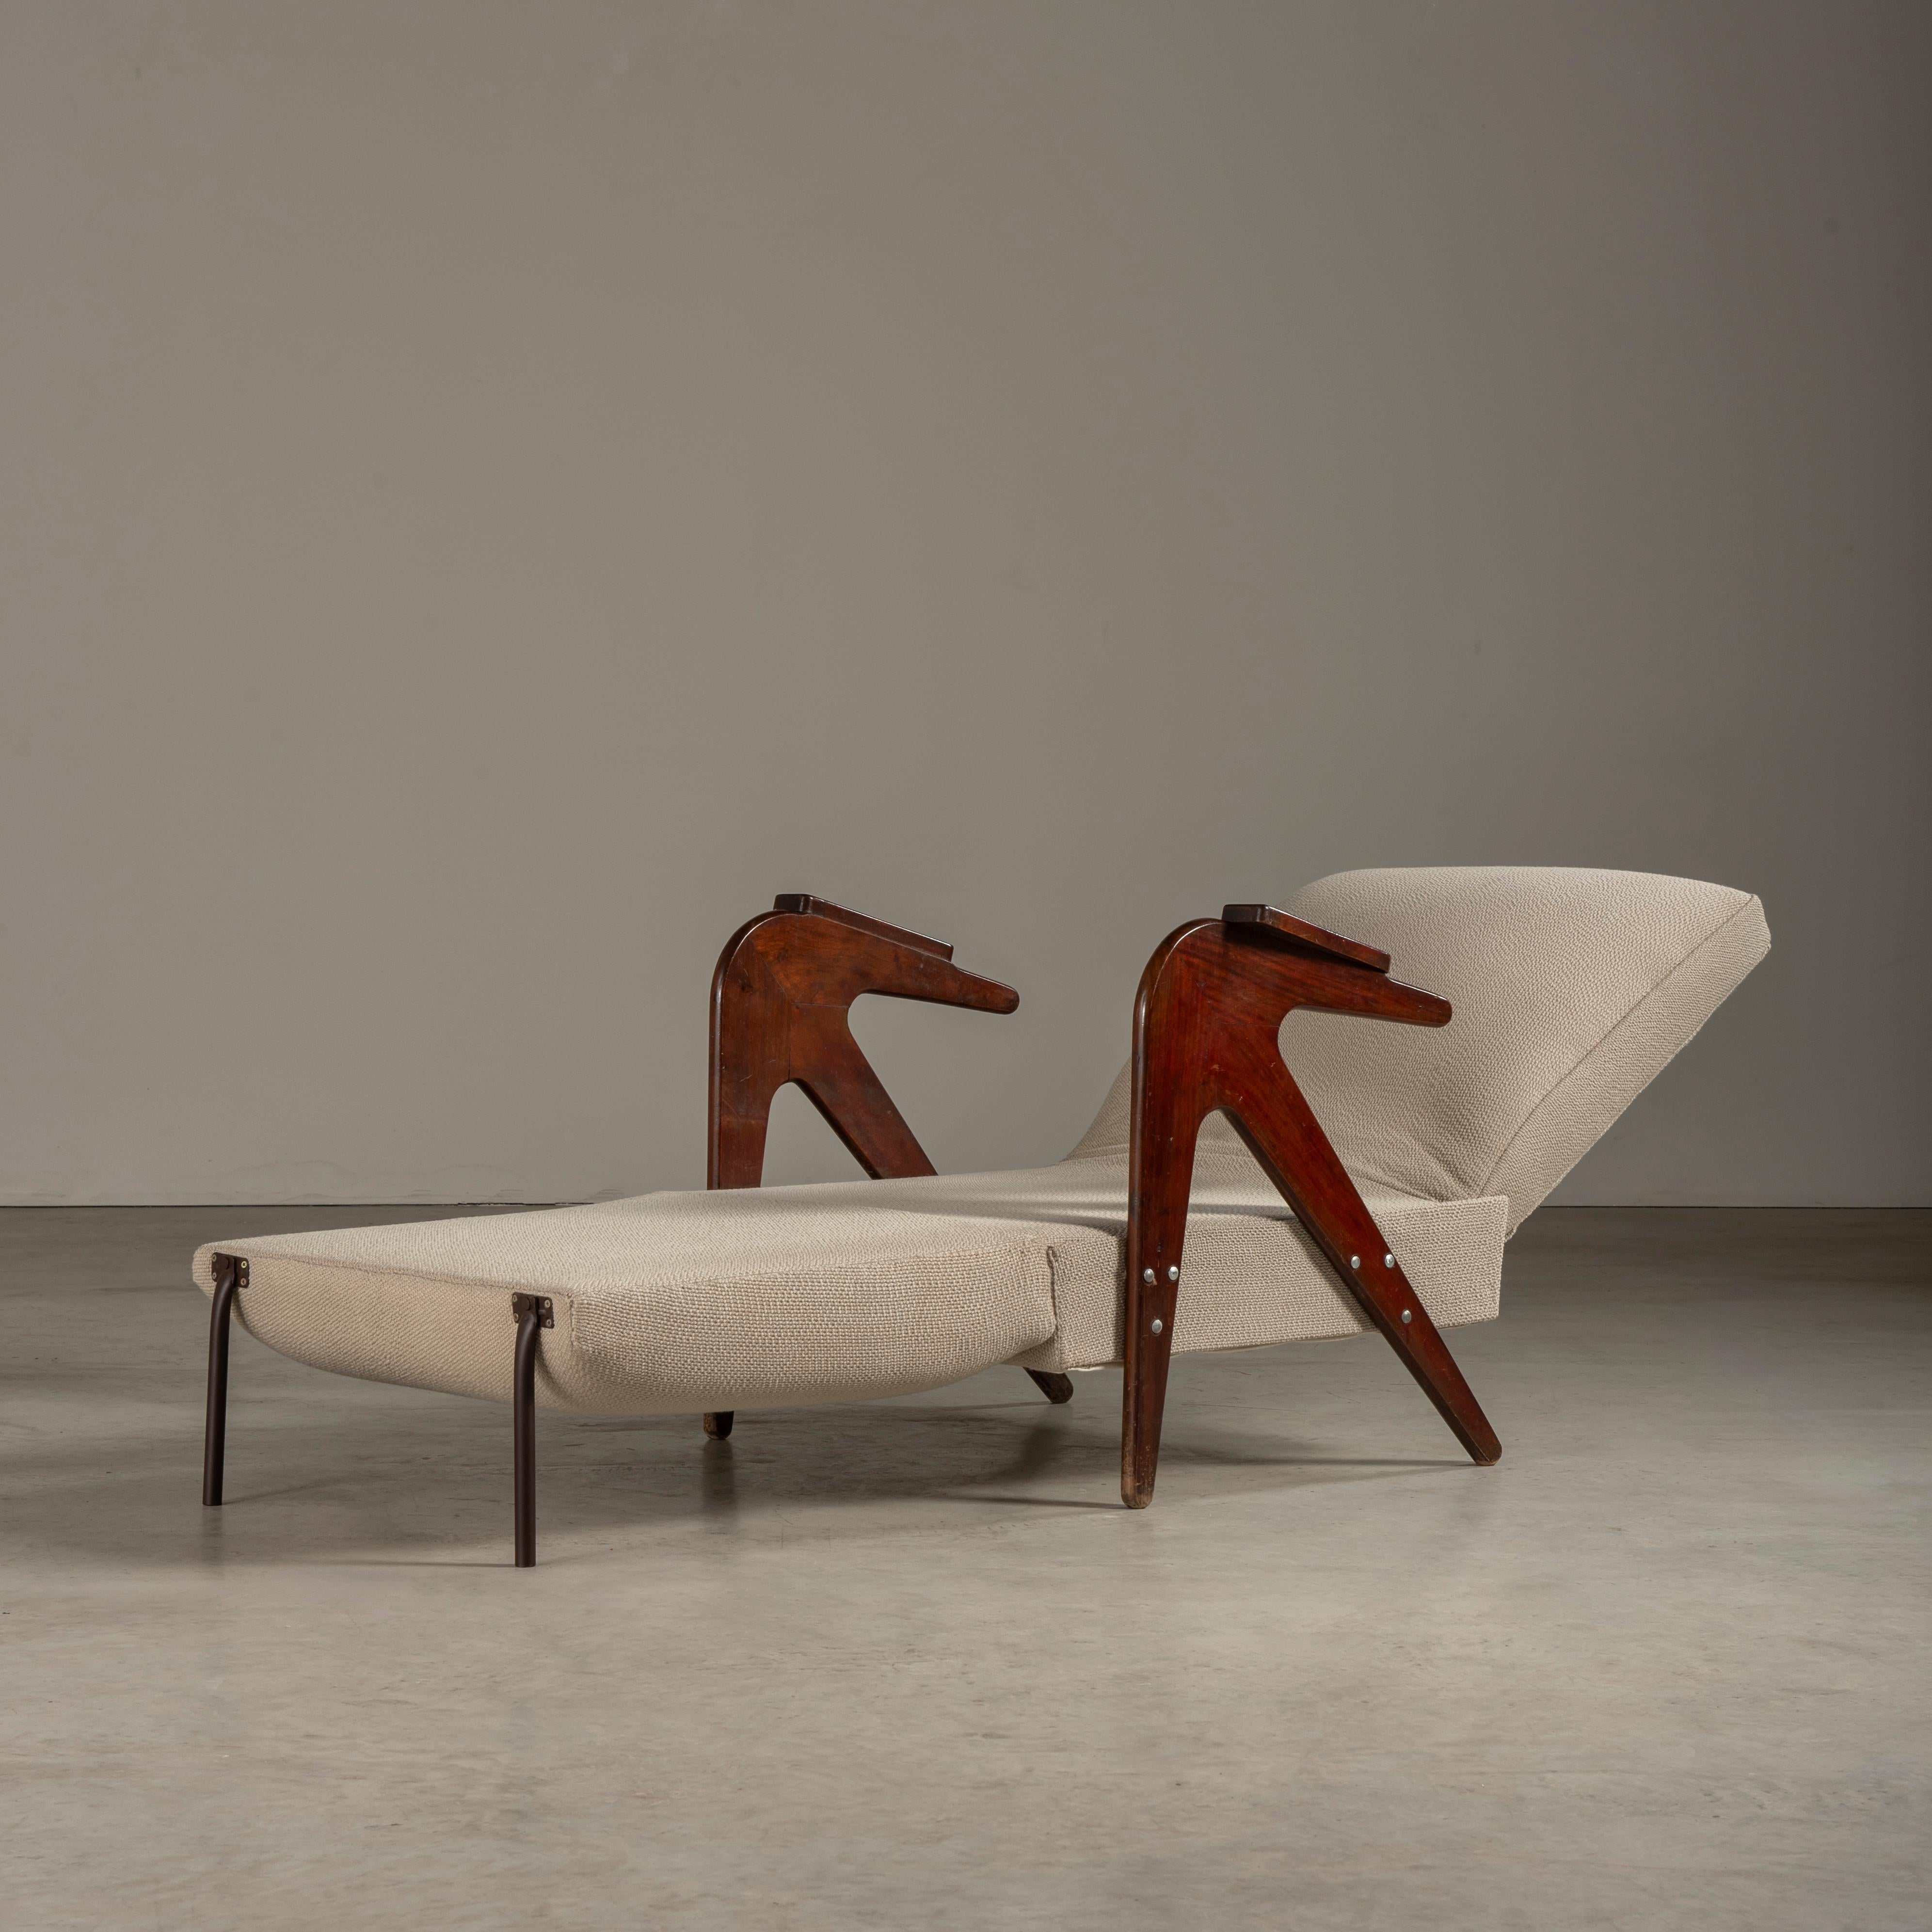 20th Century 'Tridente' Lounge Chair, by Móveis Drago, Brazilian Mid-Century Modern Design For Sale